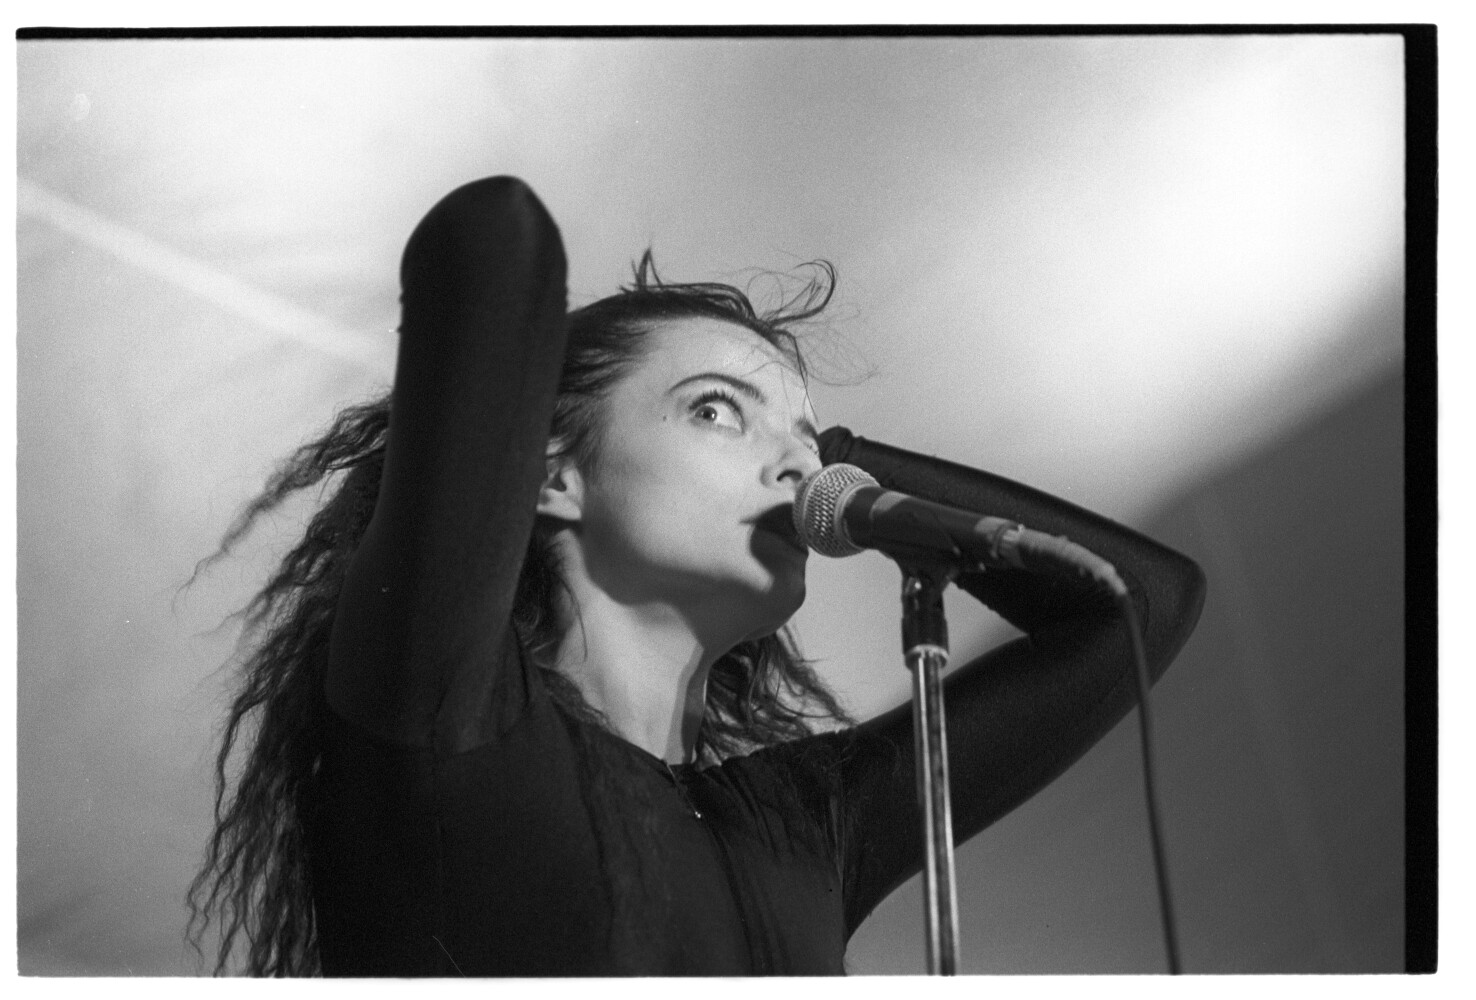 Nina Hagen & Band 19.10.1989 I N 3 (Rita Maier / Schwules Museum Berlin RR-P)